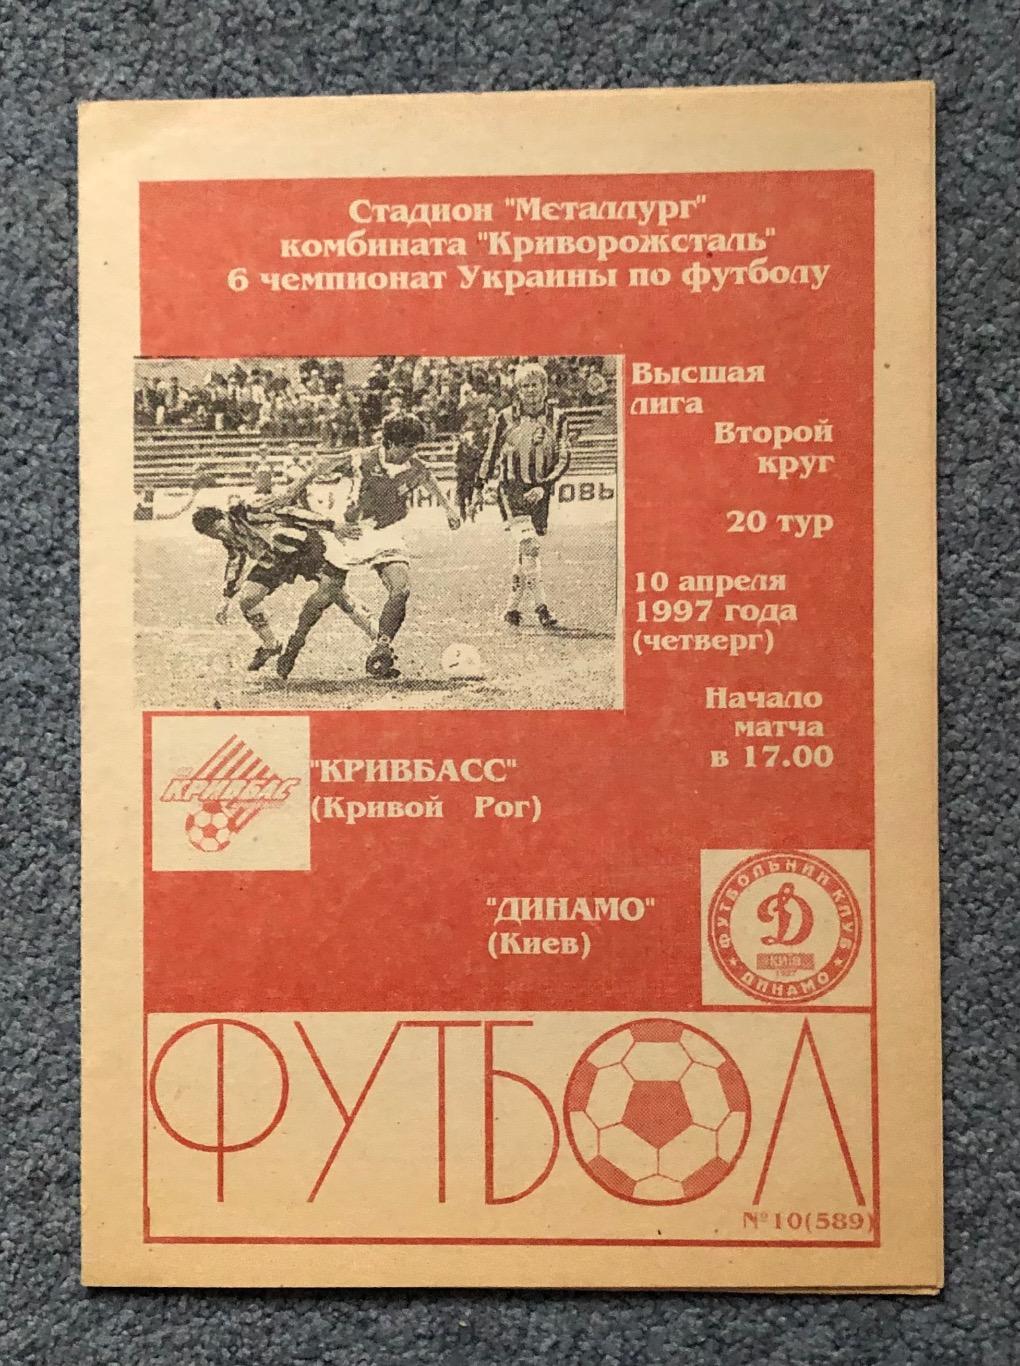 Кривбасс Кривой Рог - Динамо Киев, 10.04.1997